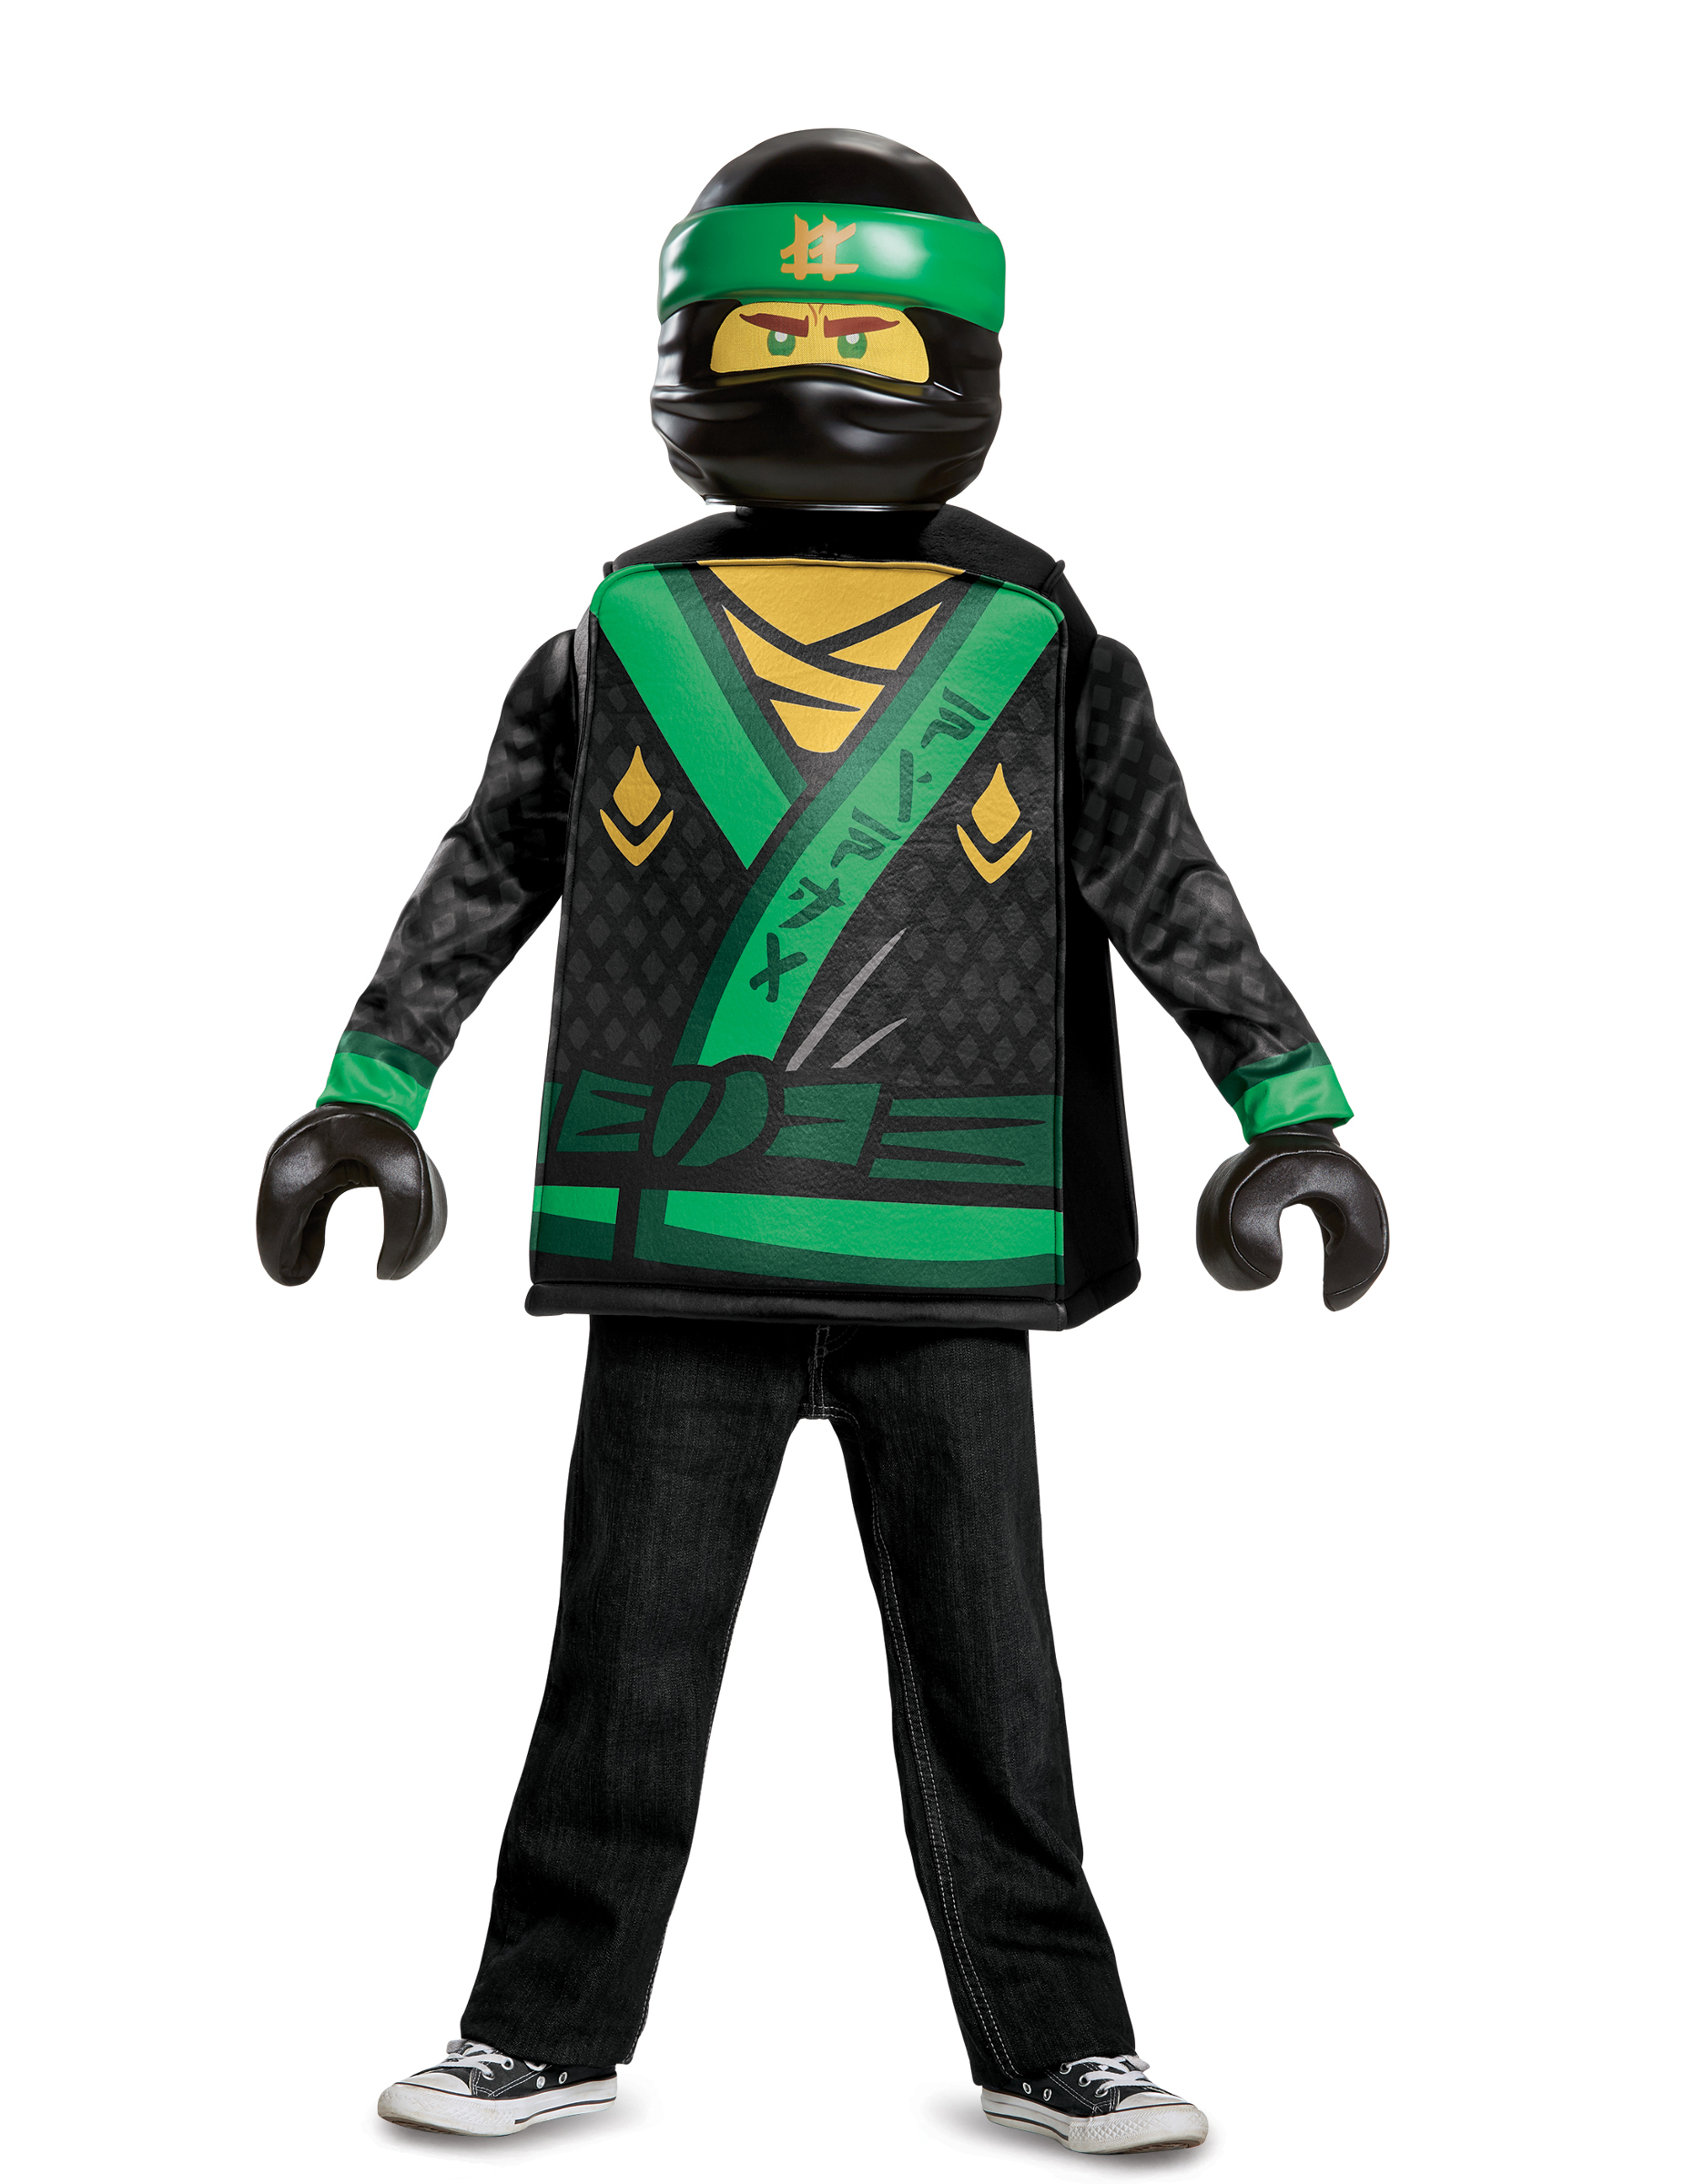 Lloyd Ninjago-Verkleidung für Kinder Karneval grün-schwarz von KARNEVAL-MEGASTORE